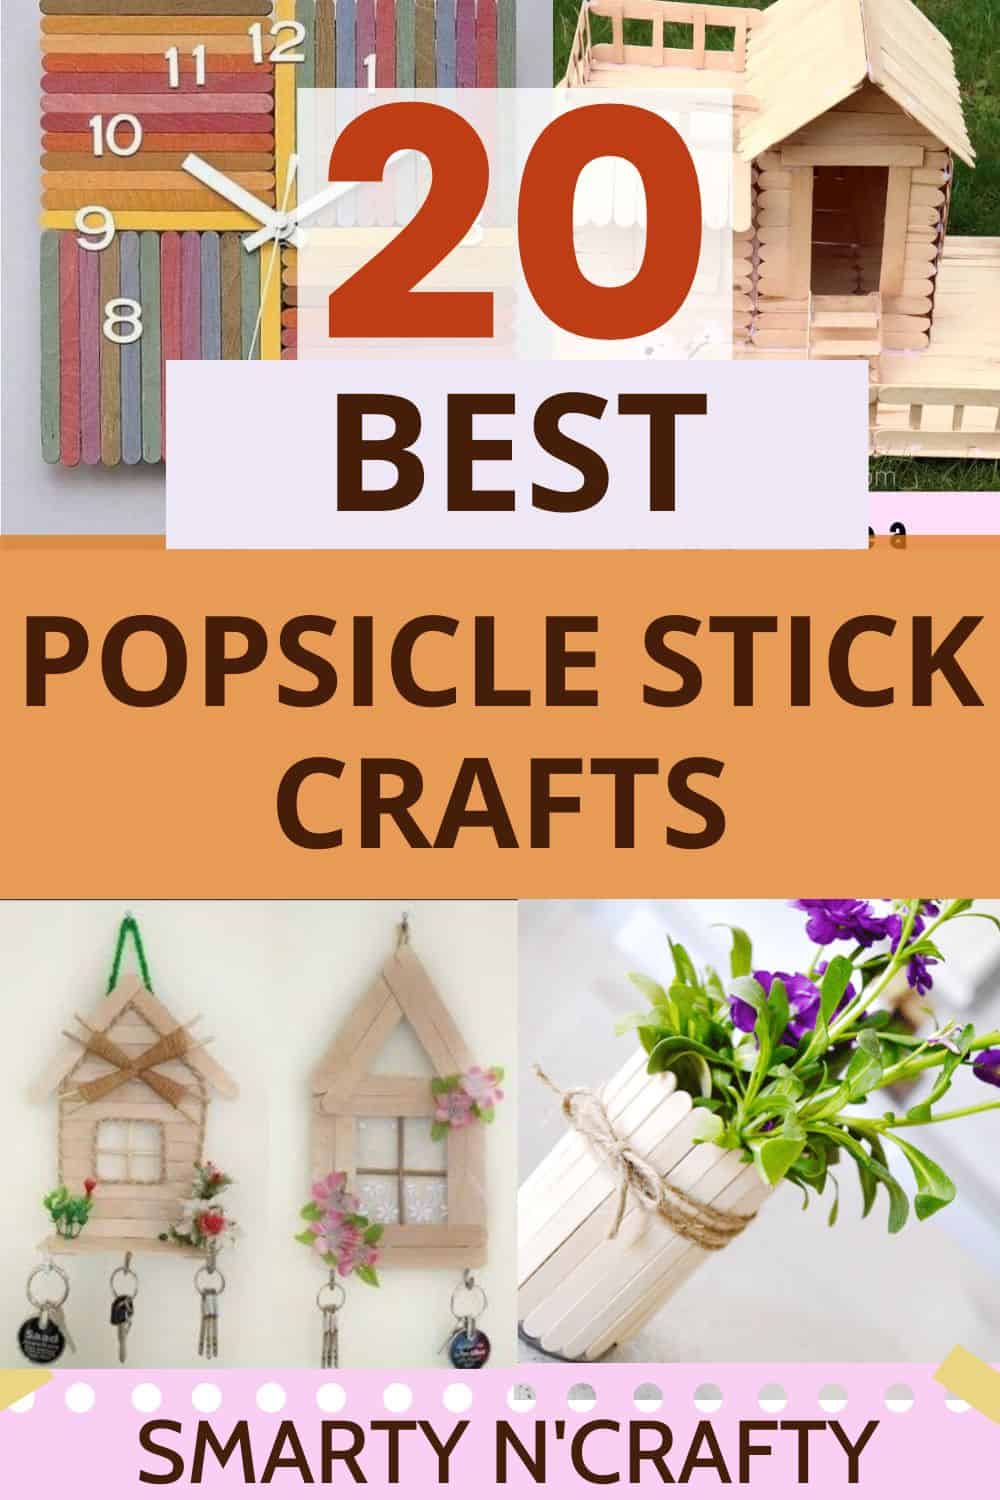 popsicle stick building craft ideas